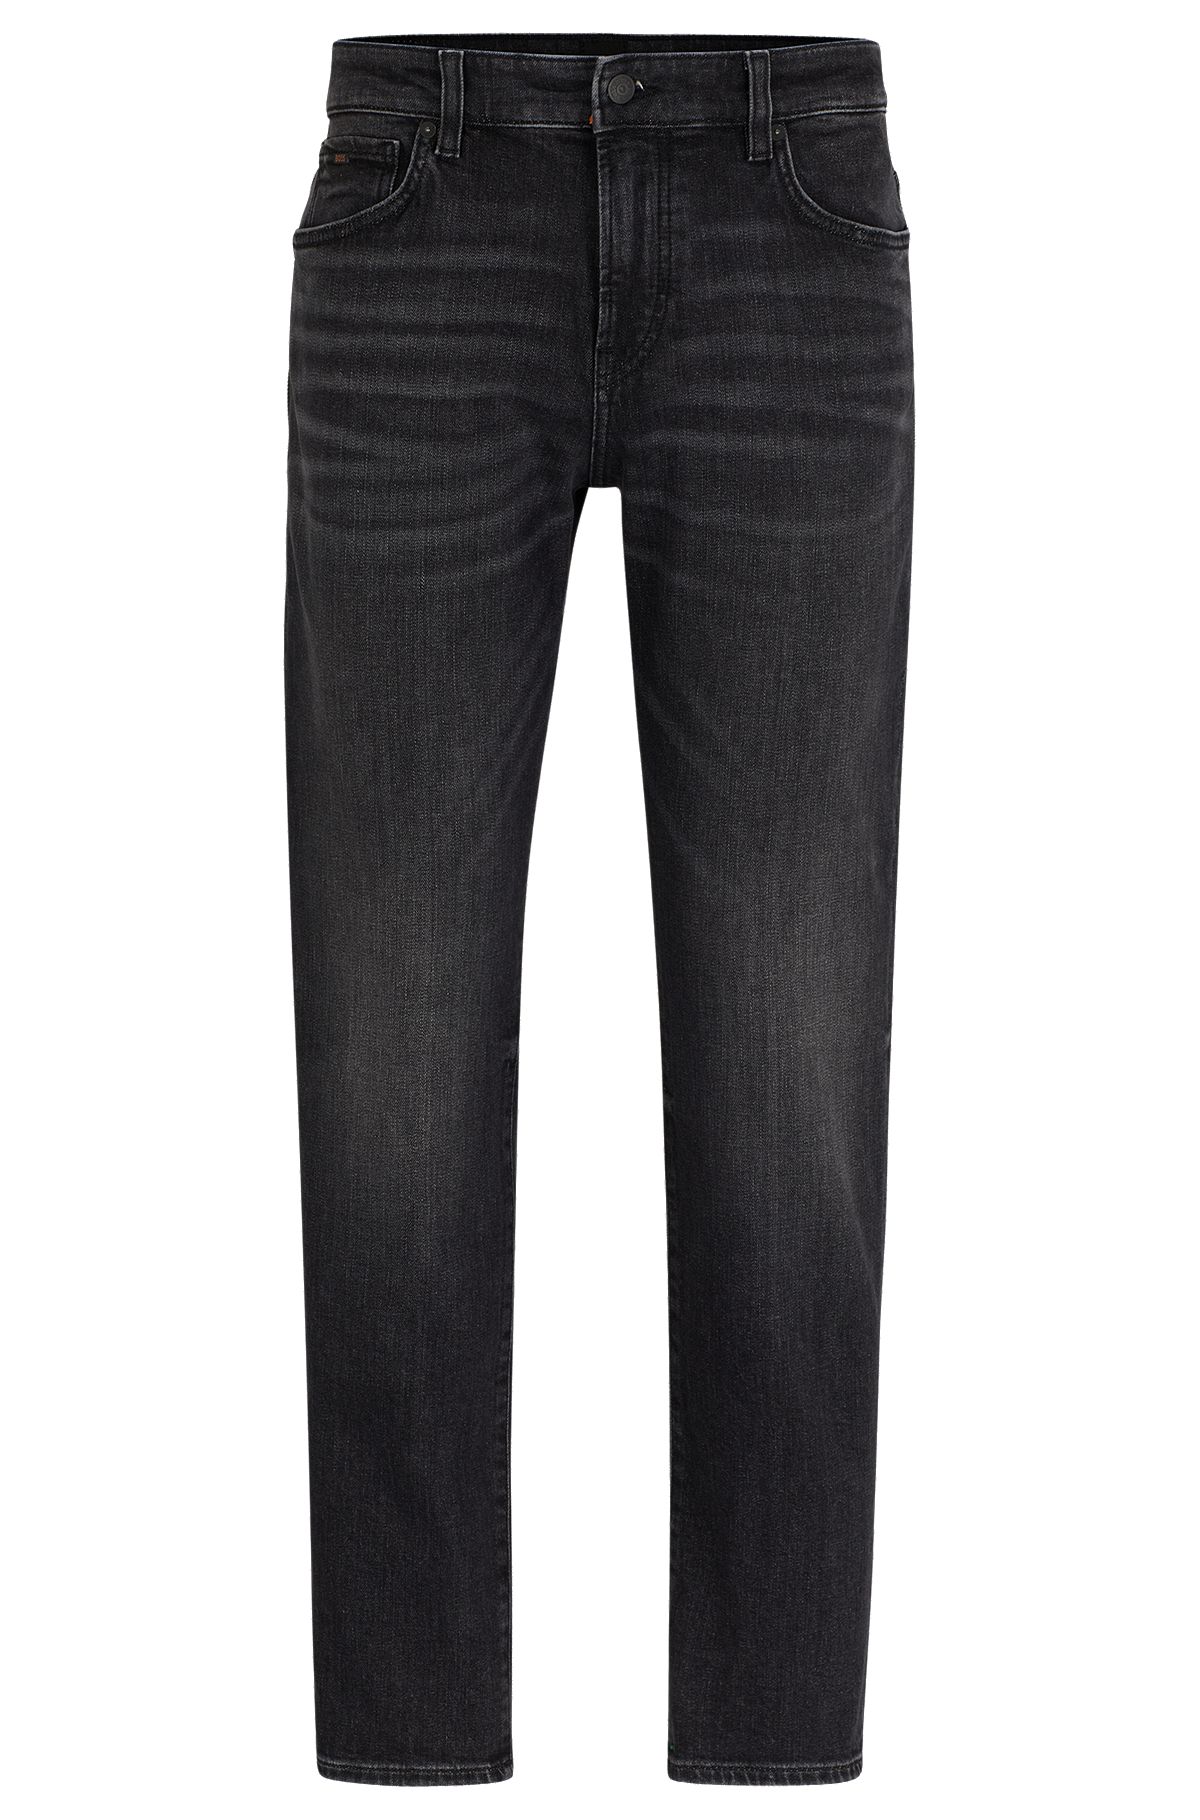 Jeans regular fit in comodo denim elasticizzato nero, Grigio scuro